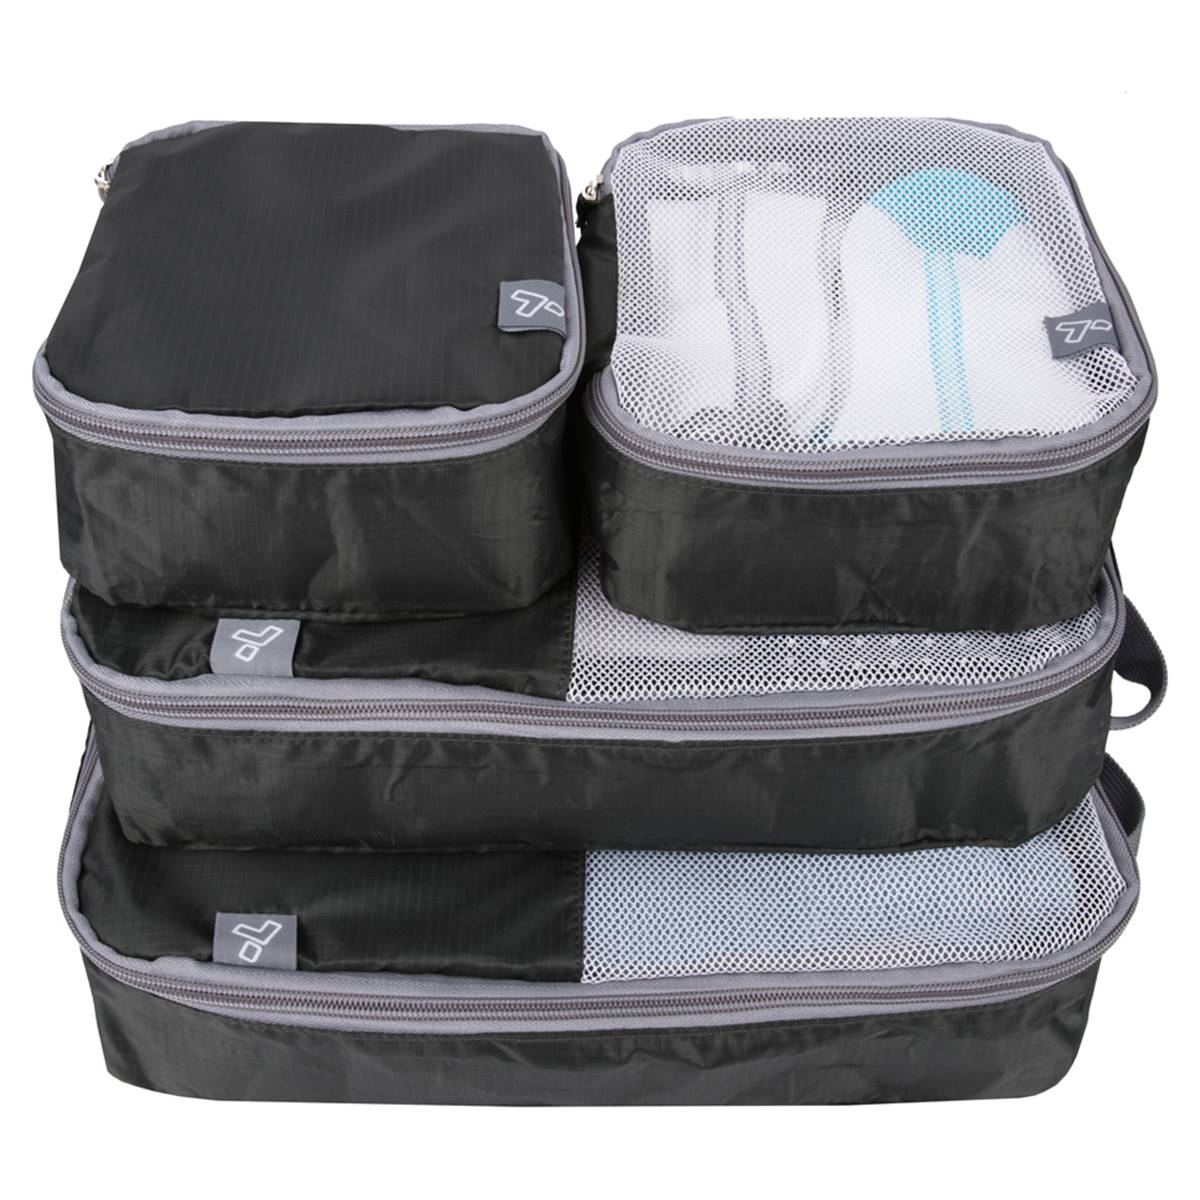 Travelon 4pc. Soft Packing Organizers